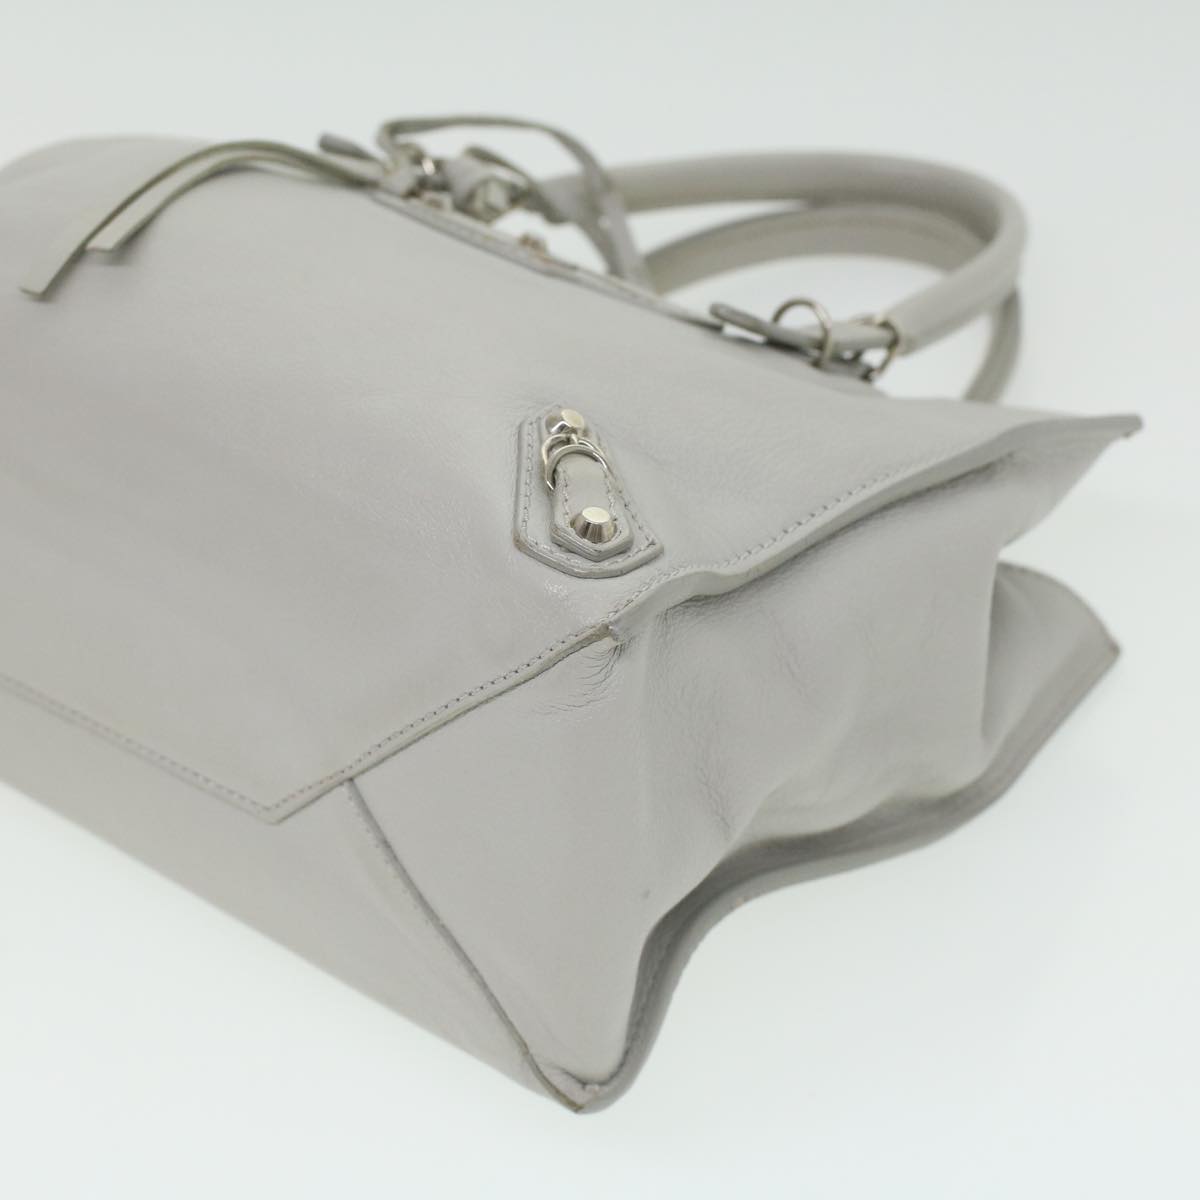 BALENCIAGA Paper mini Hand Bag Leather Gray 305572 Auth yk5630